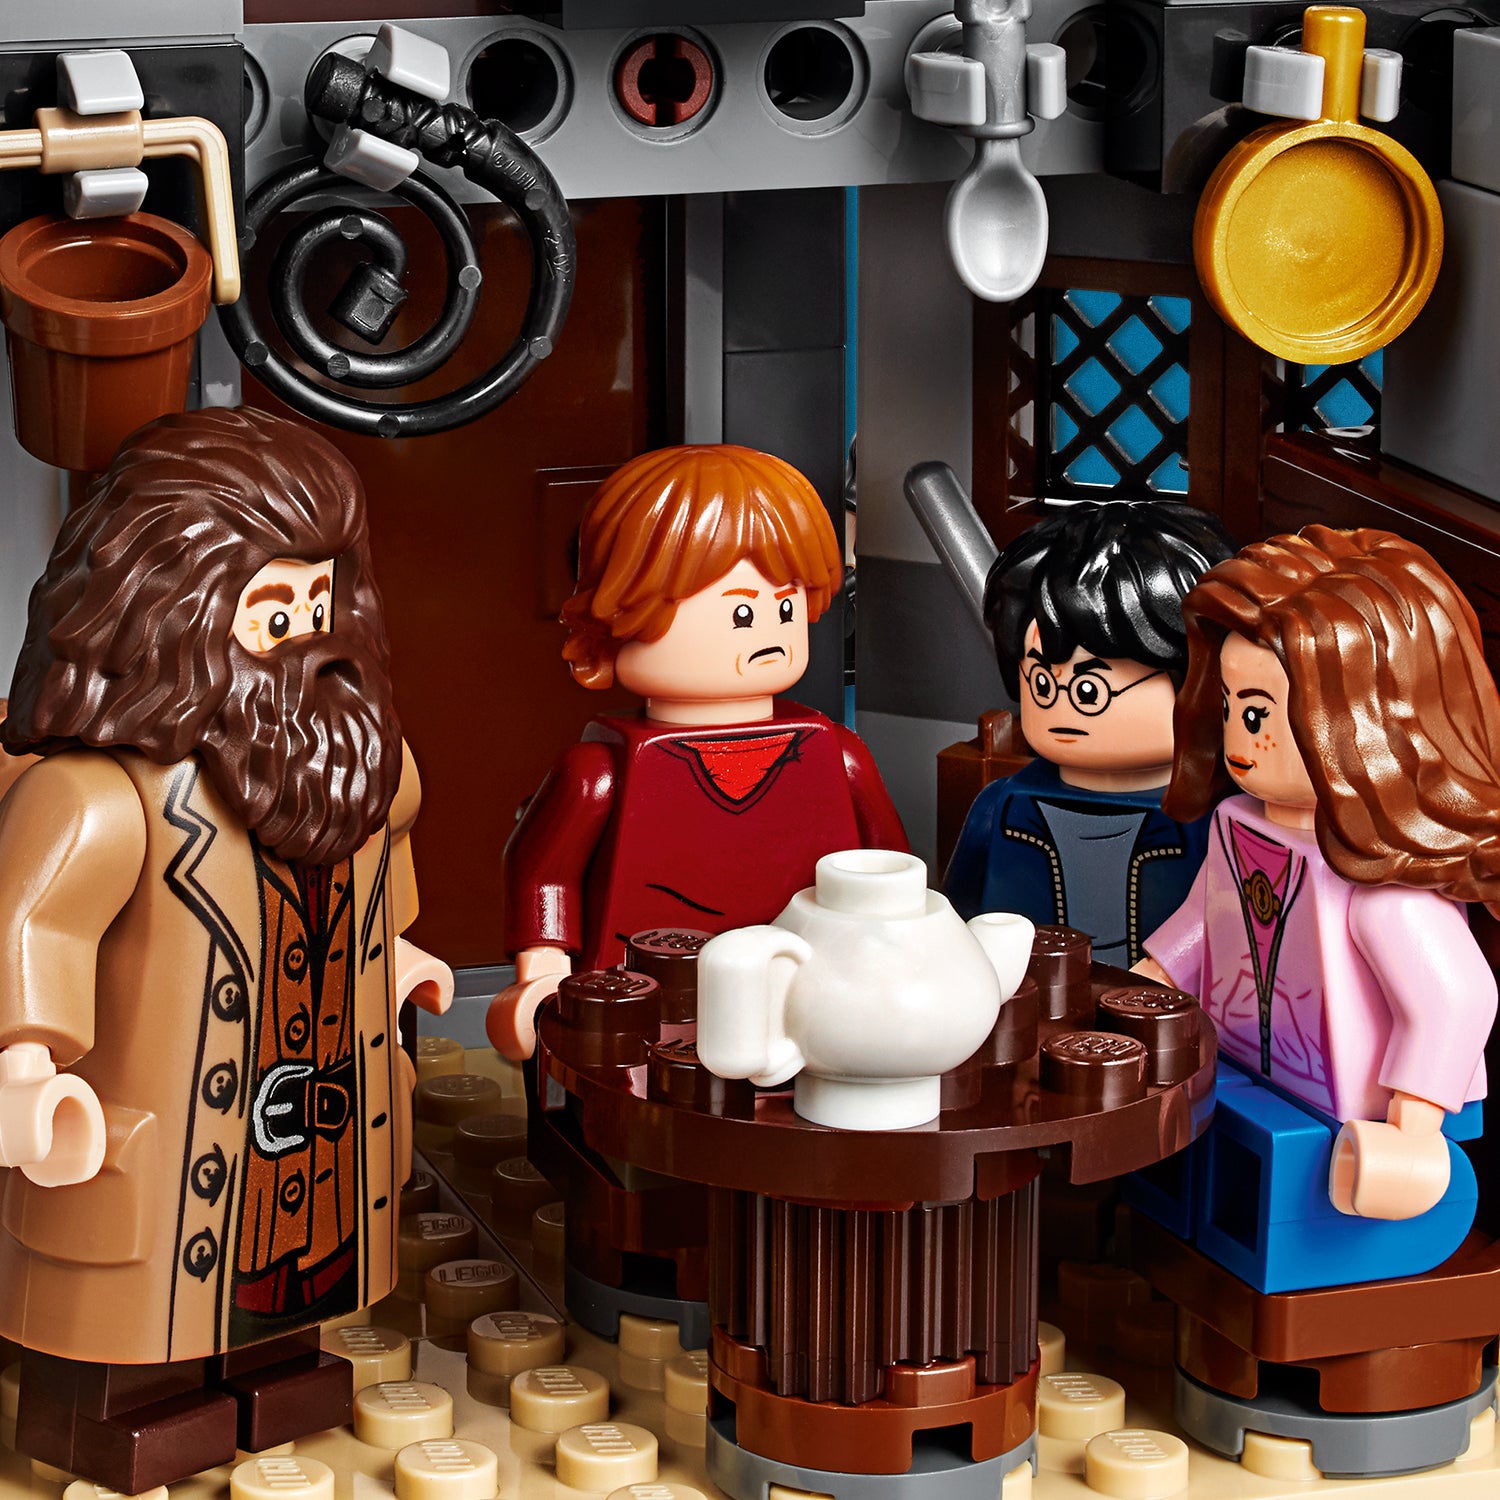 LEGO® Harry Potter Hagrid’s Hut Playset 75947 Default Title